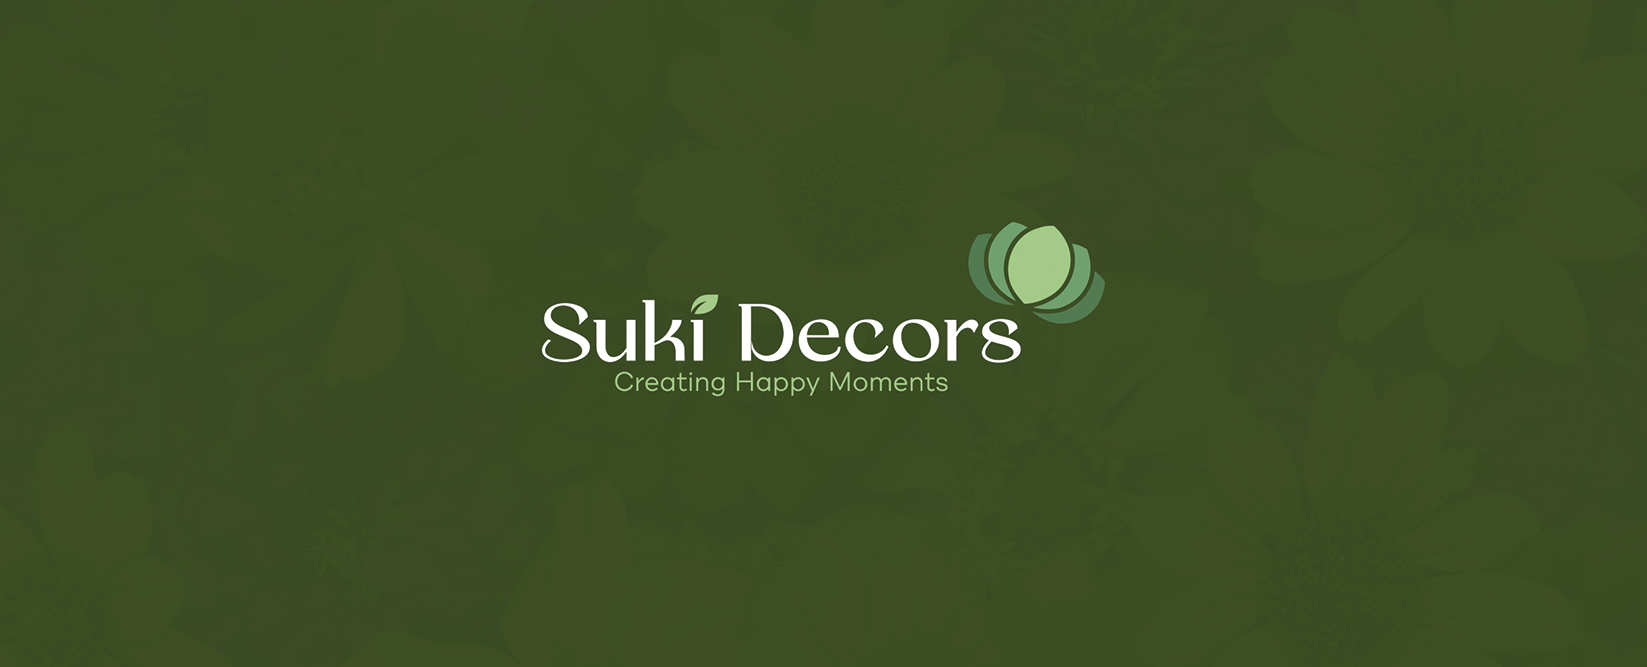 SukiDecors-logo